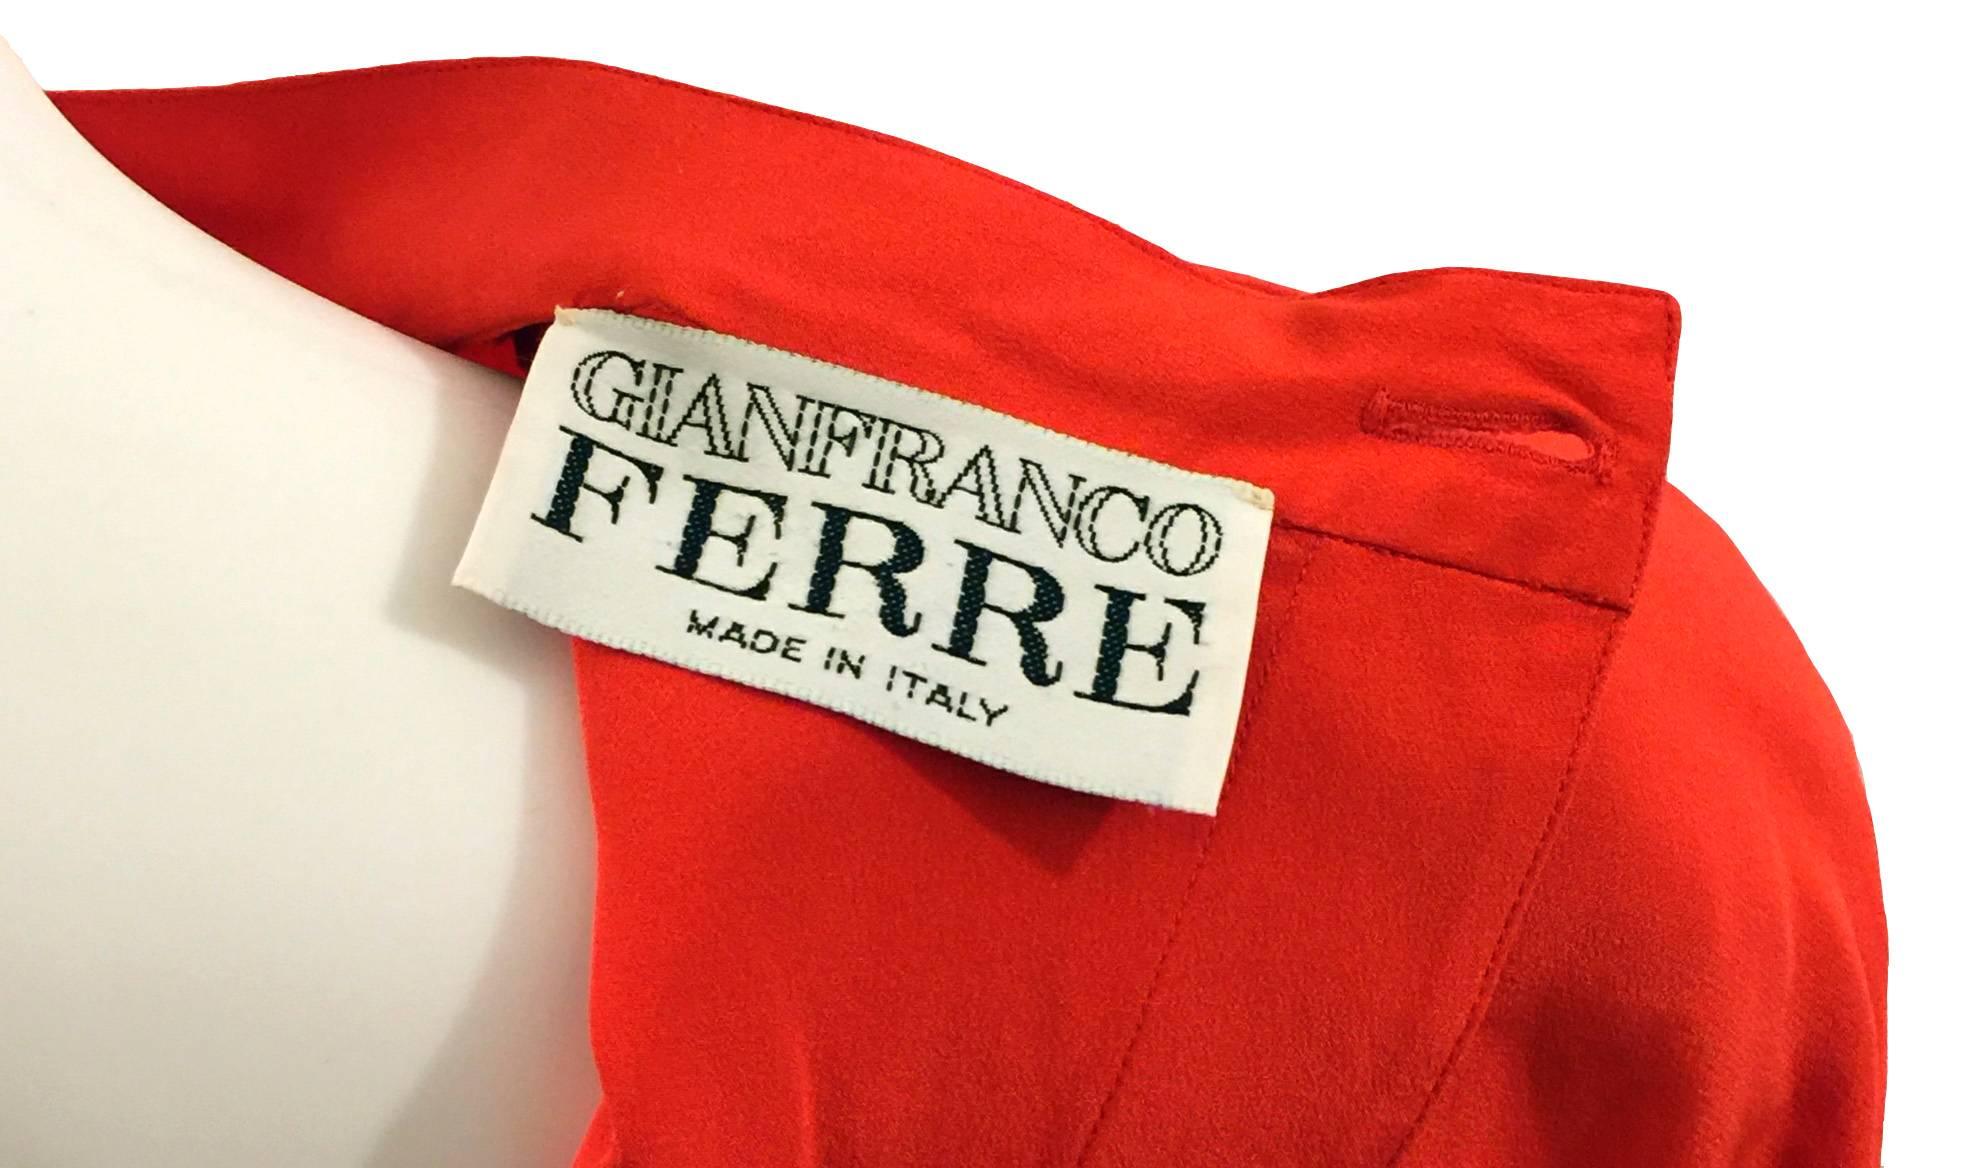 Women's Gianfranco Ferré Vintage Dress with Over-Skirt.  